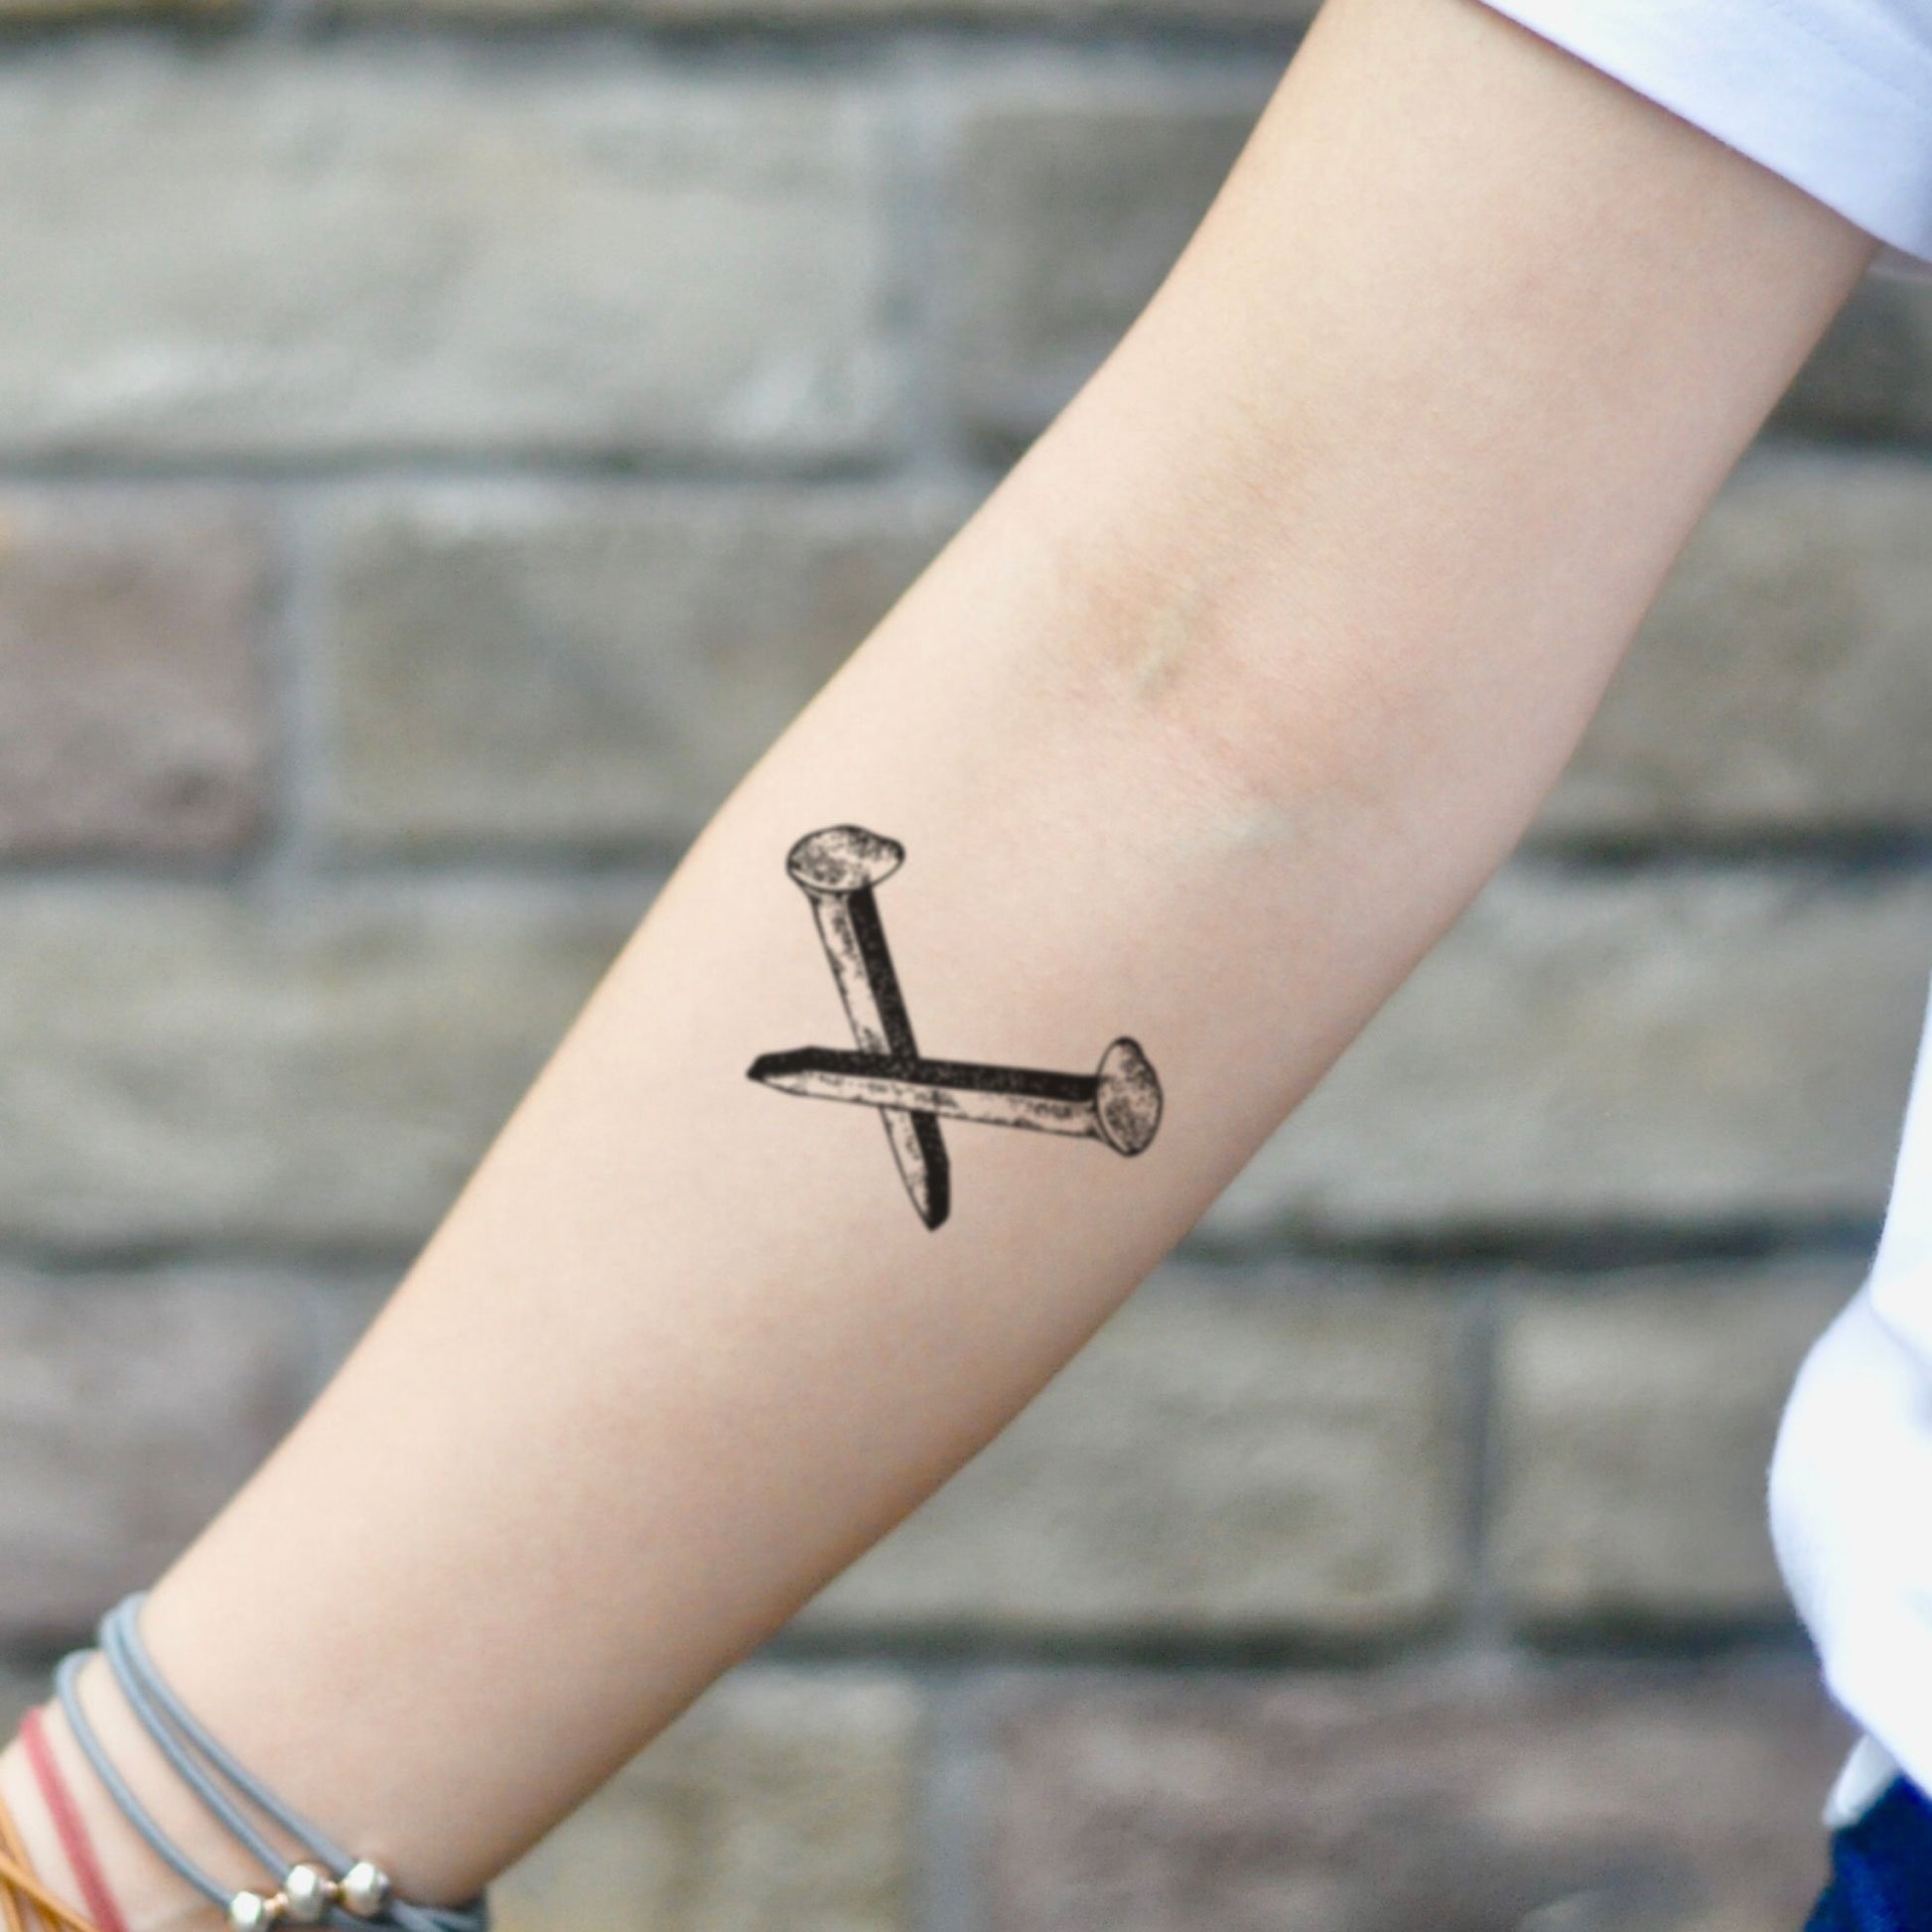 fake small railroad spike rare minimalist temporary tattoo sticker design idea on inner arm